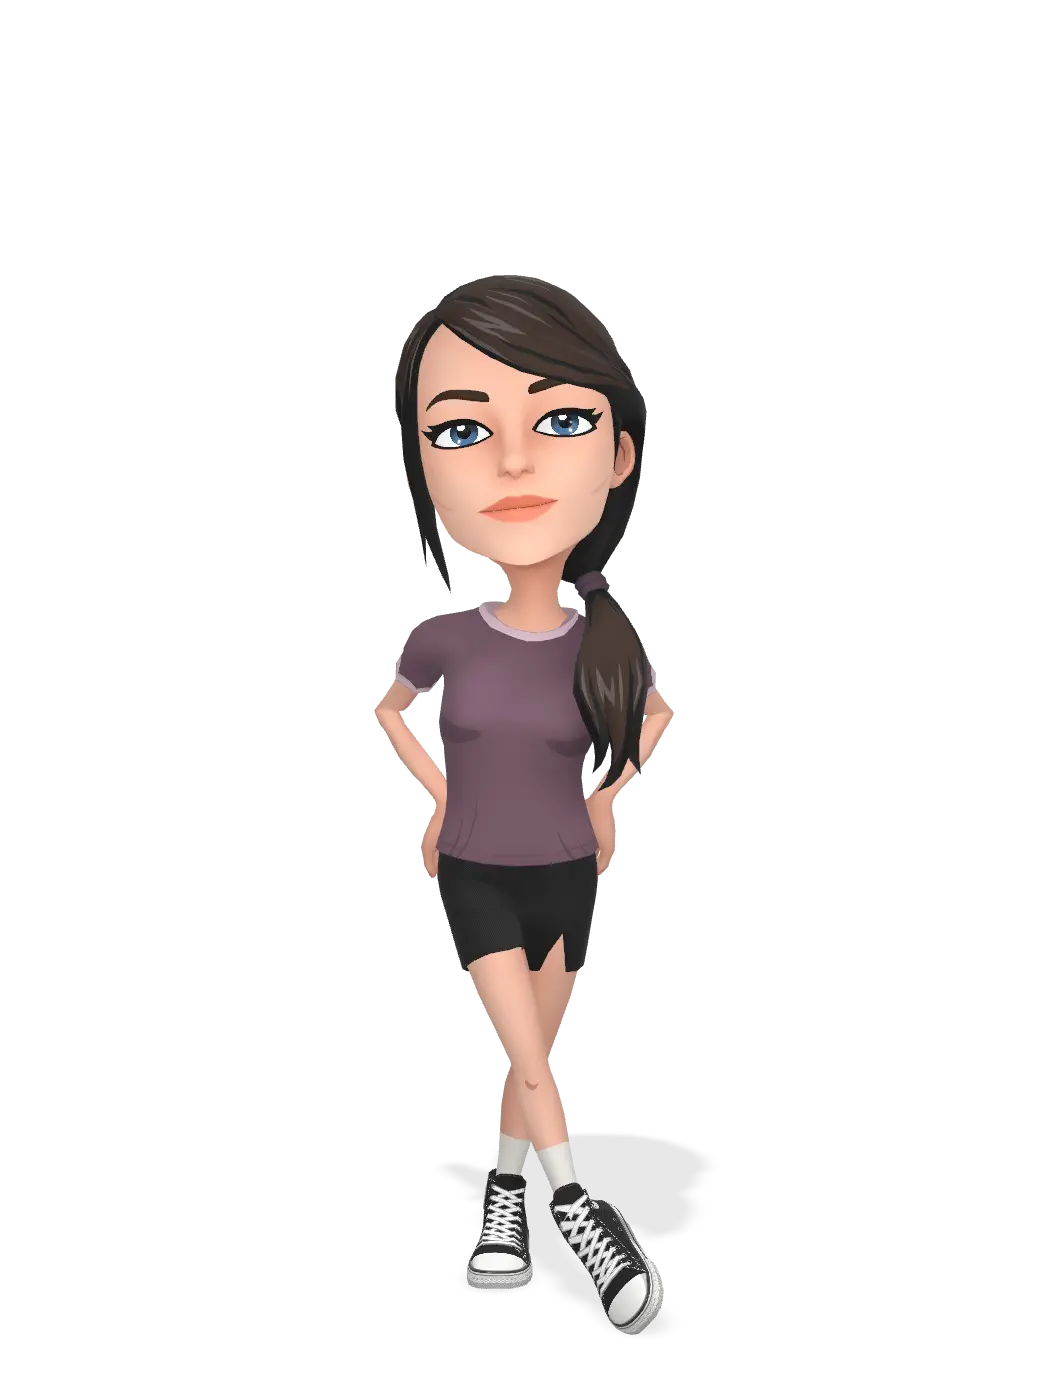 3D Bitmoji for jupit3rjules avatar